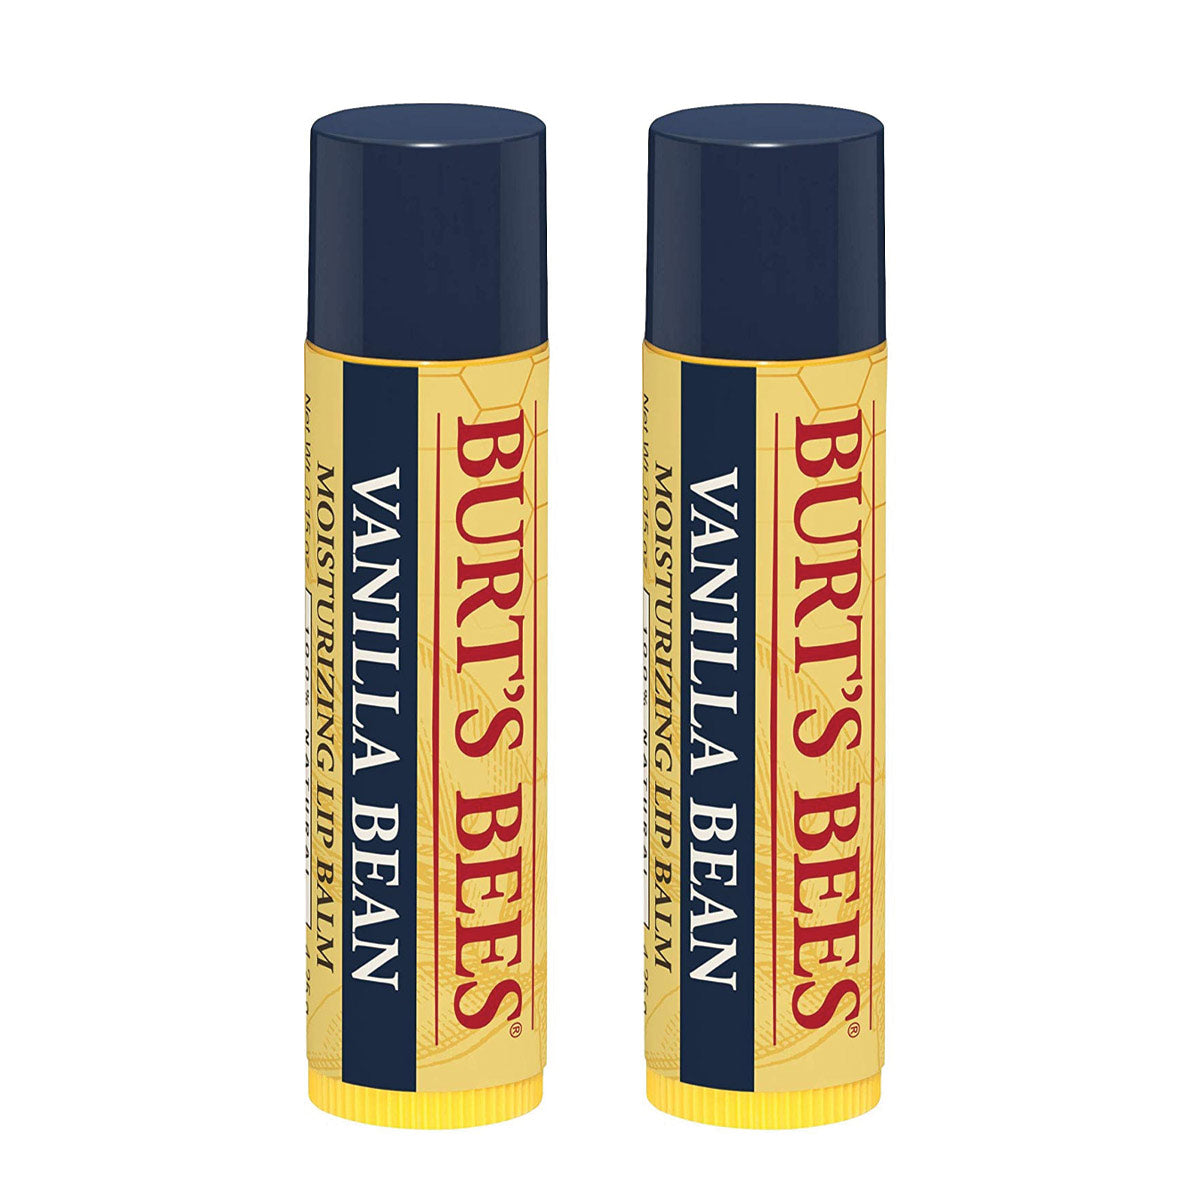 Lip Balm Tube by Burt's Bees (14 flavors)